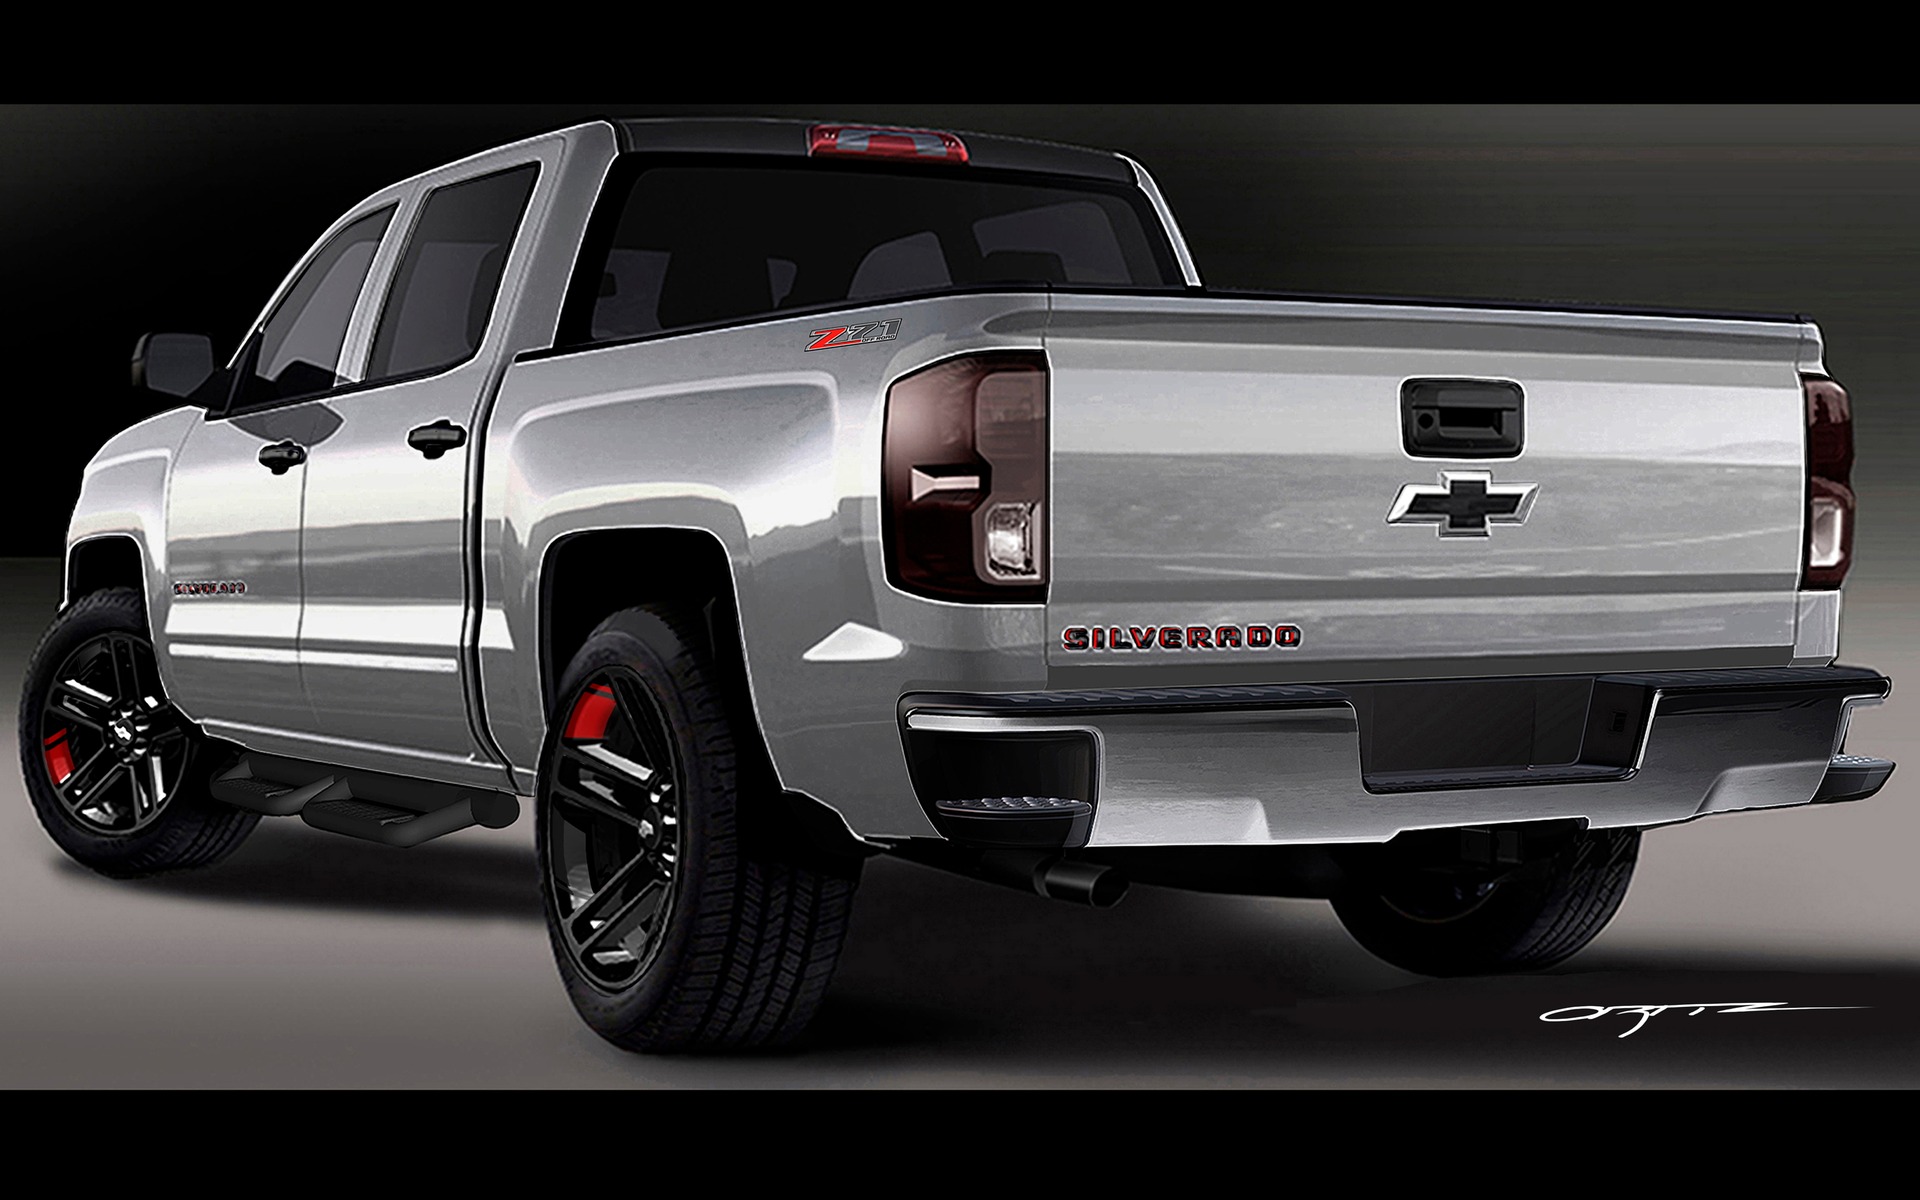 Chevrolet Silverado Red Line Series Concept